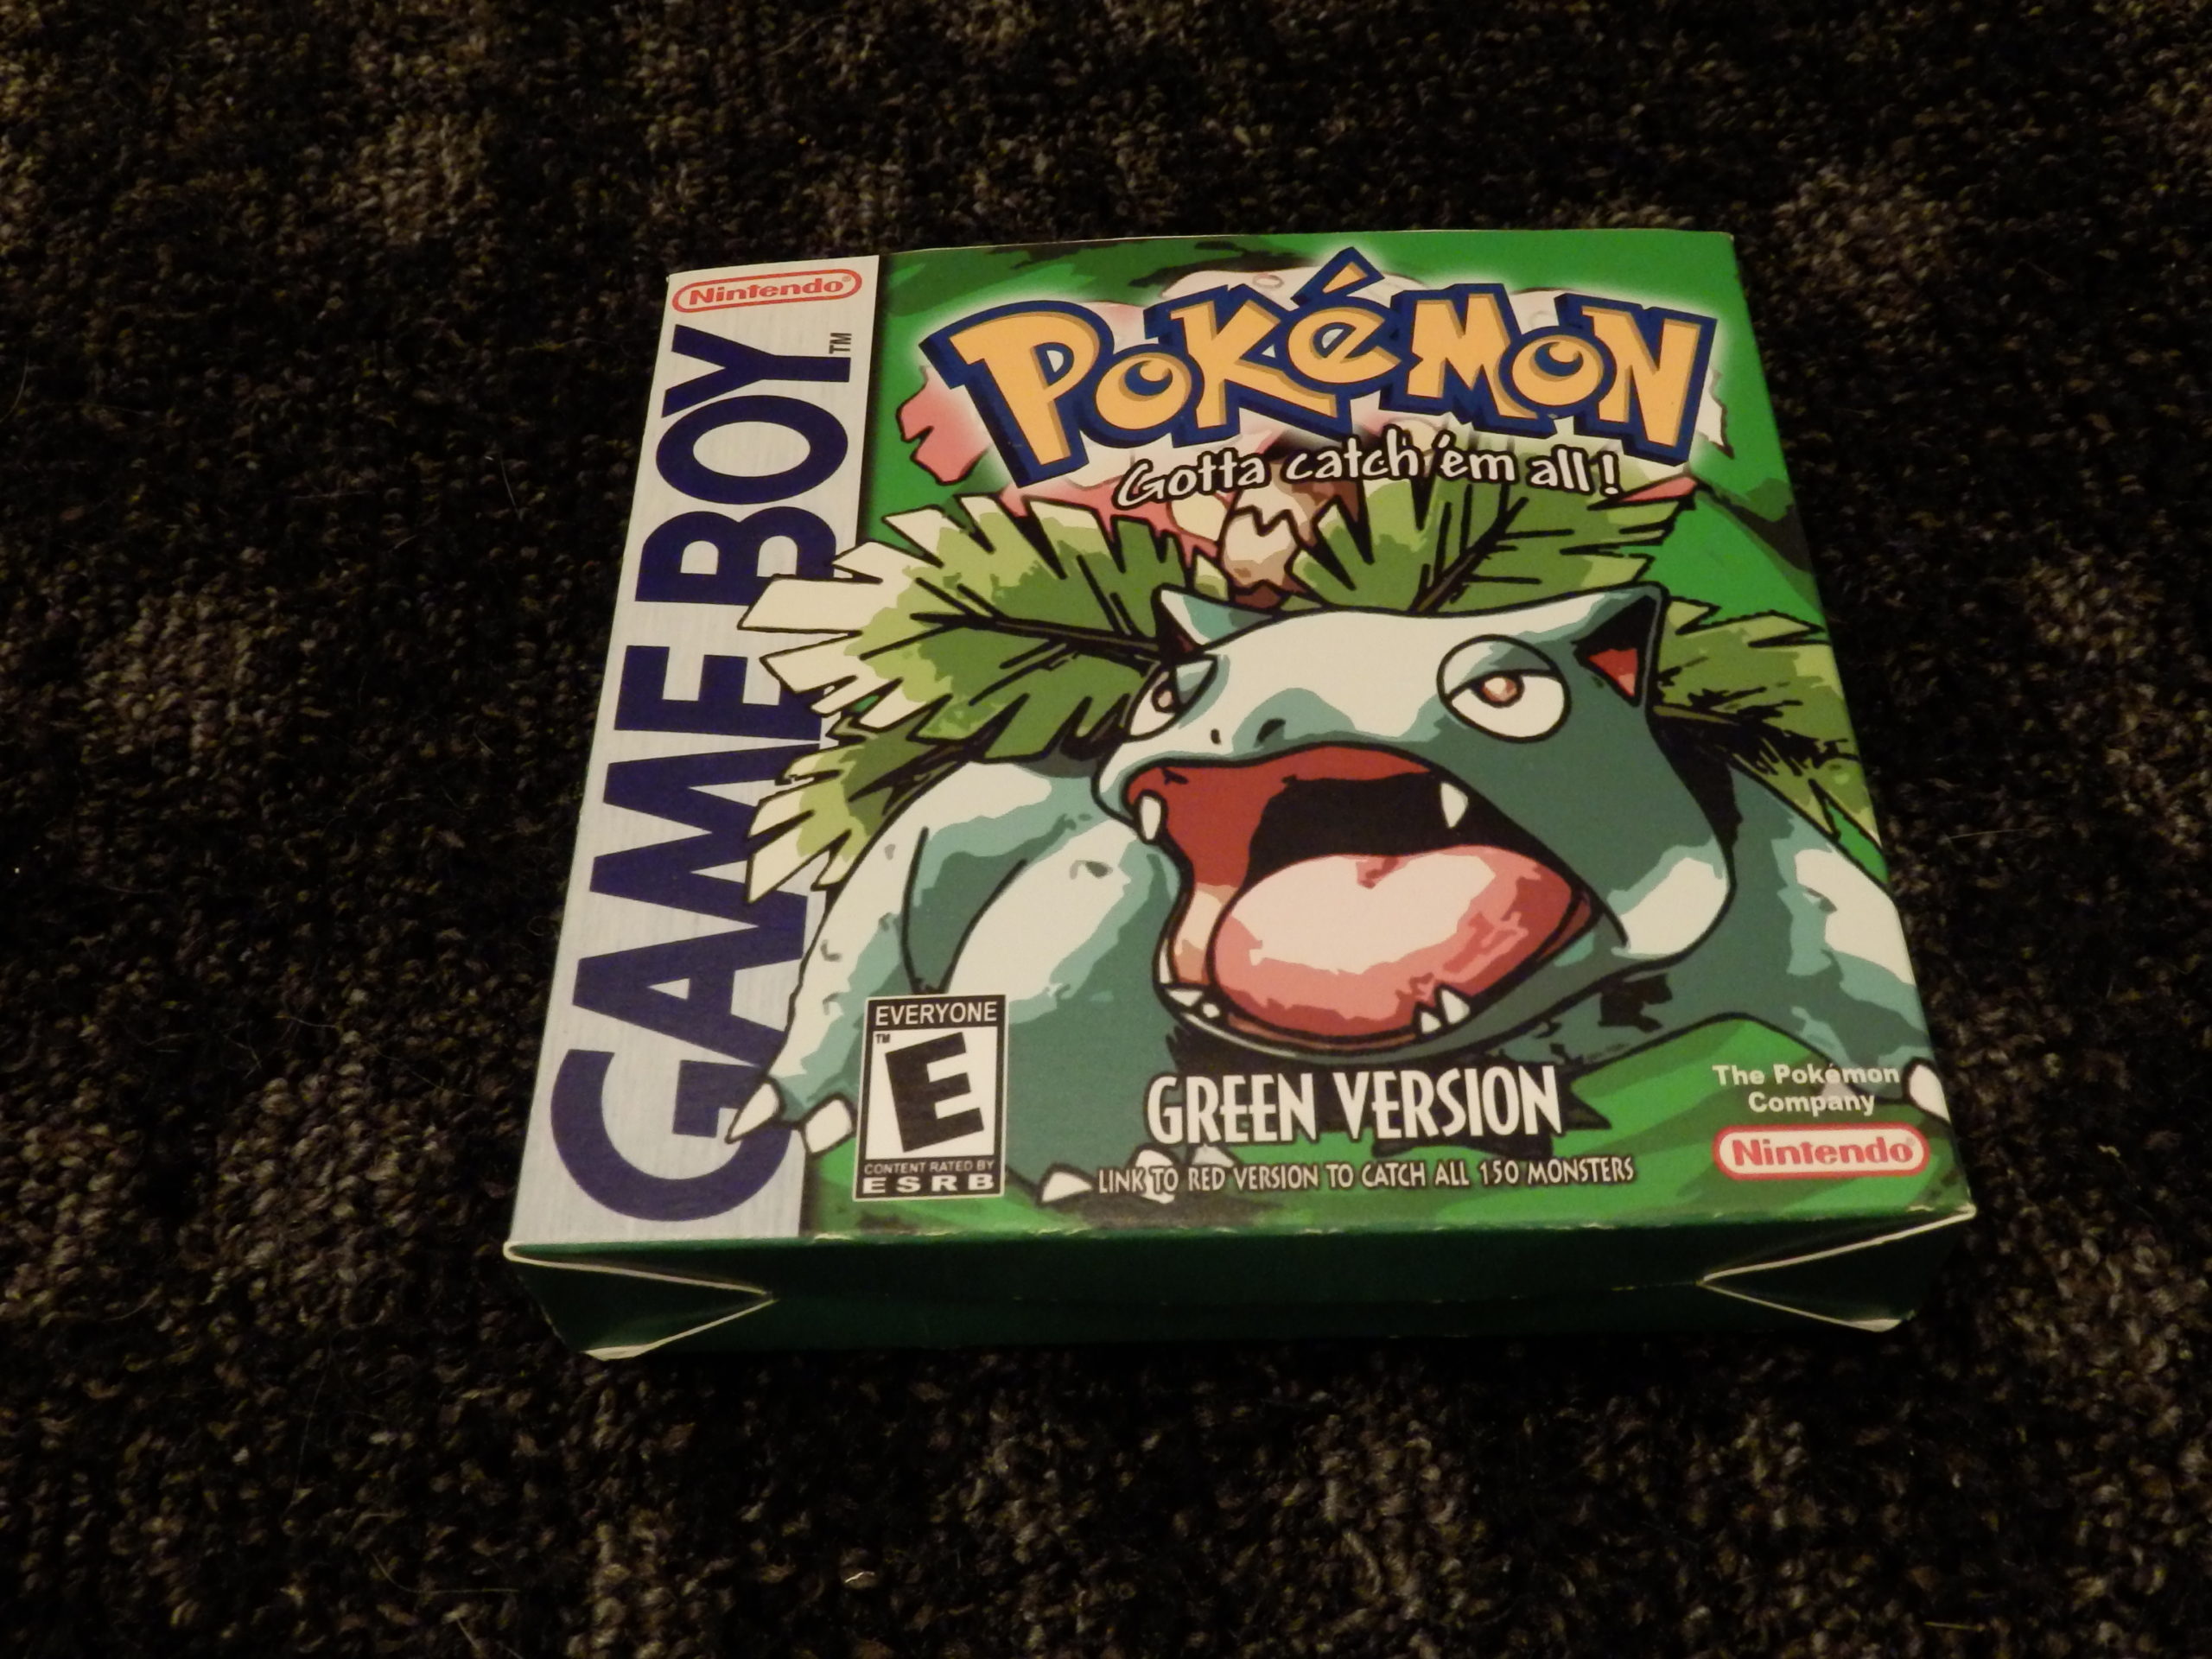 Pokemon Green BoxBox My Games! Reproduction game boxes